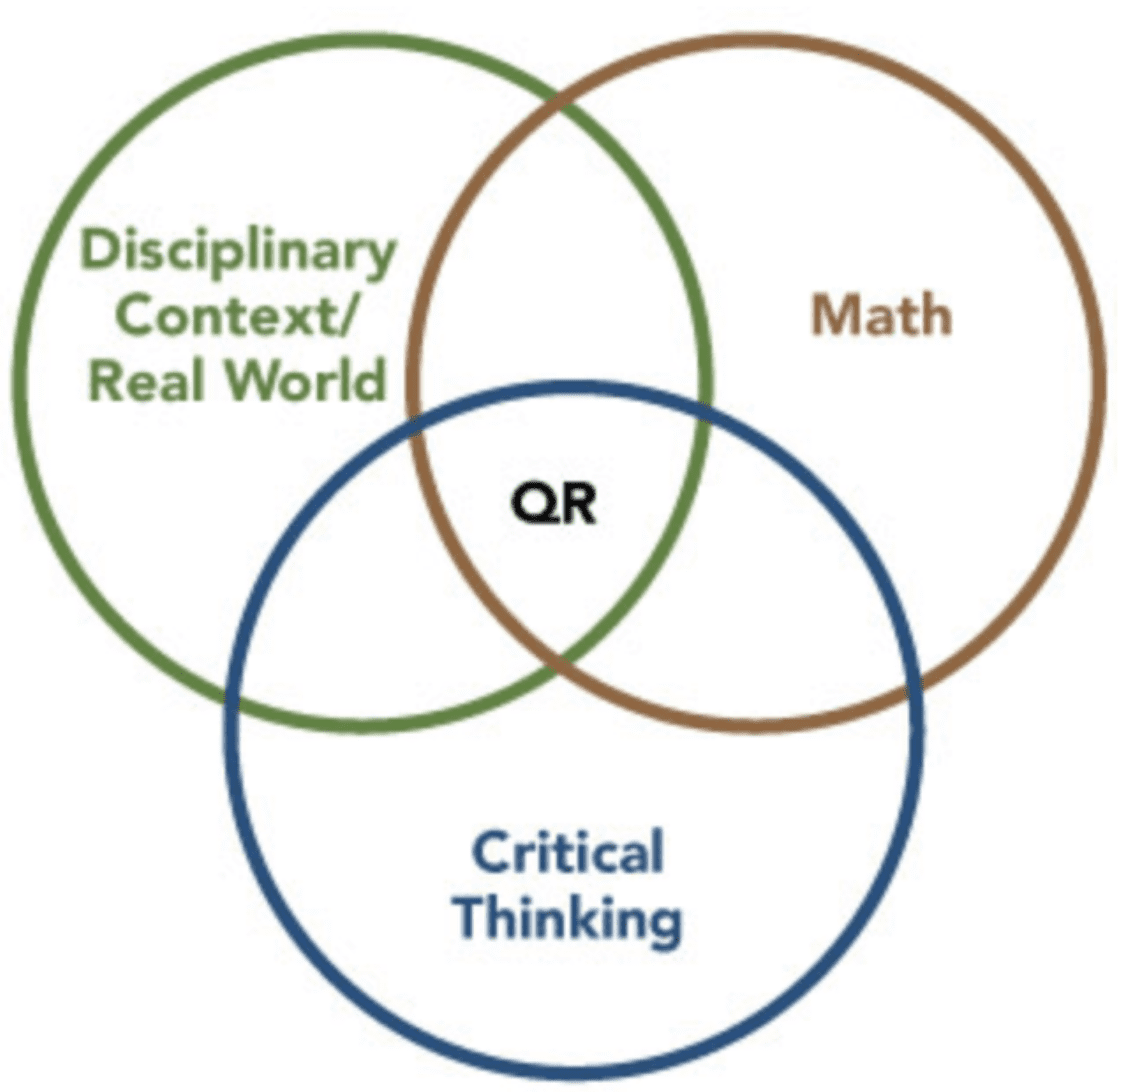 A Venn diagram. Disciplinary Context/Real World, Math, Critical Thinking make up the three outer circles and QR is the inner circle.